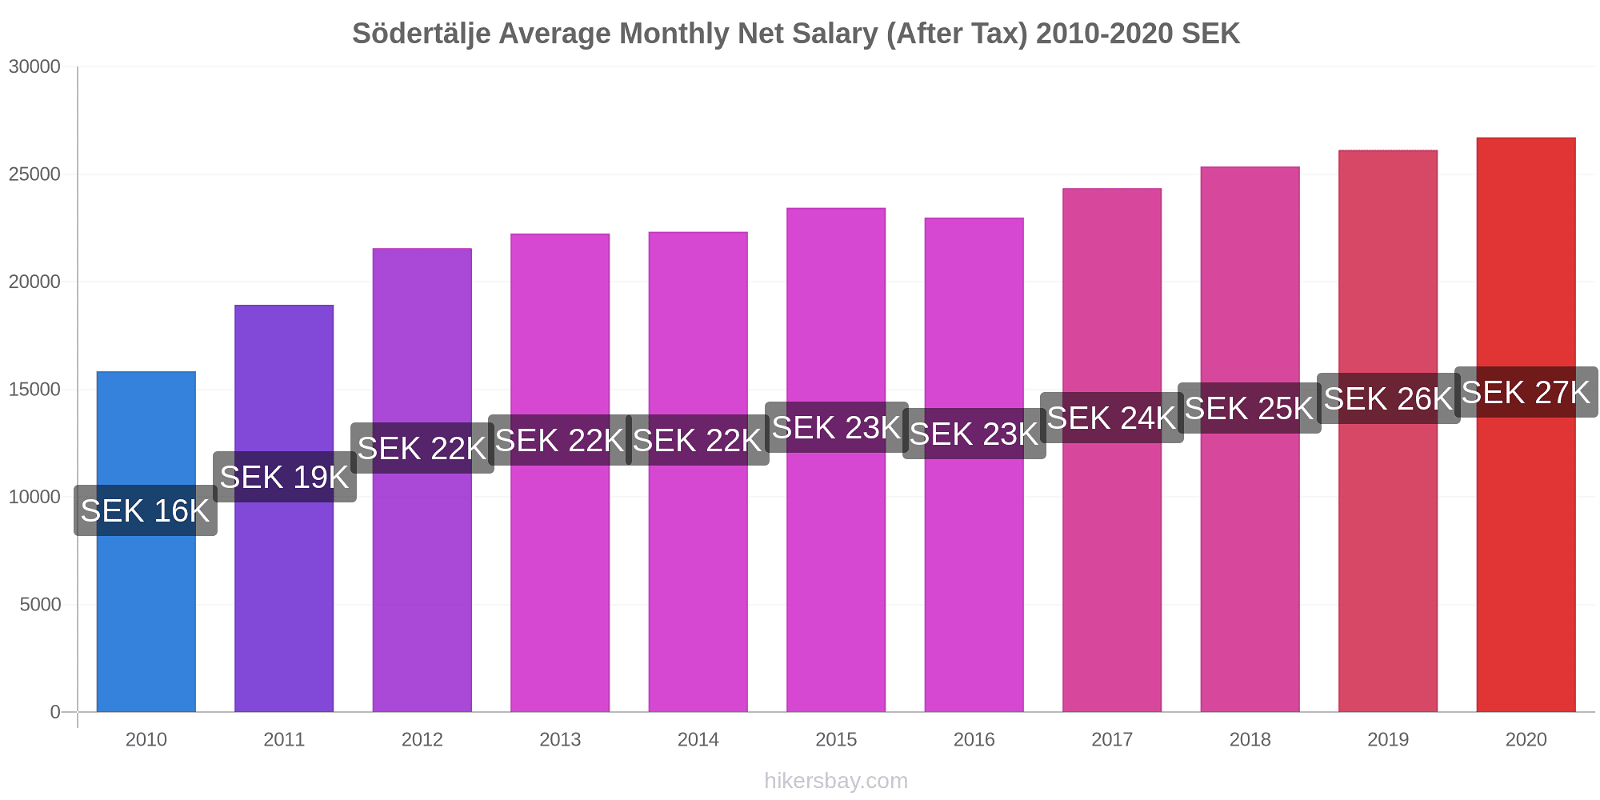 Södertälje price changes Average Monthly Net Salary (After Tax) hikersbay.com